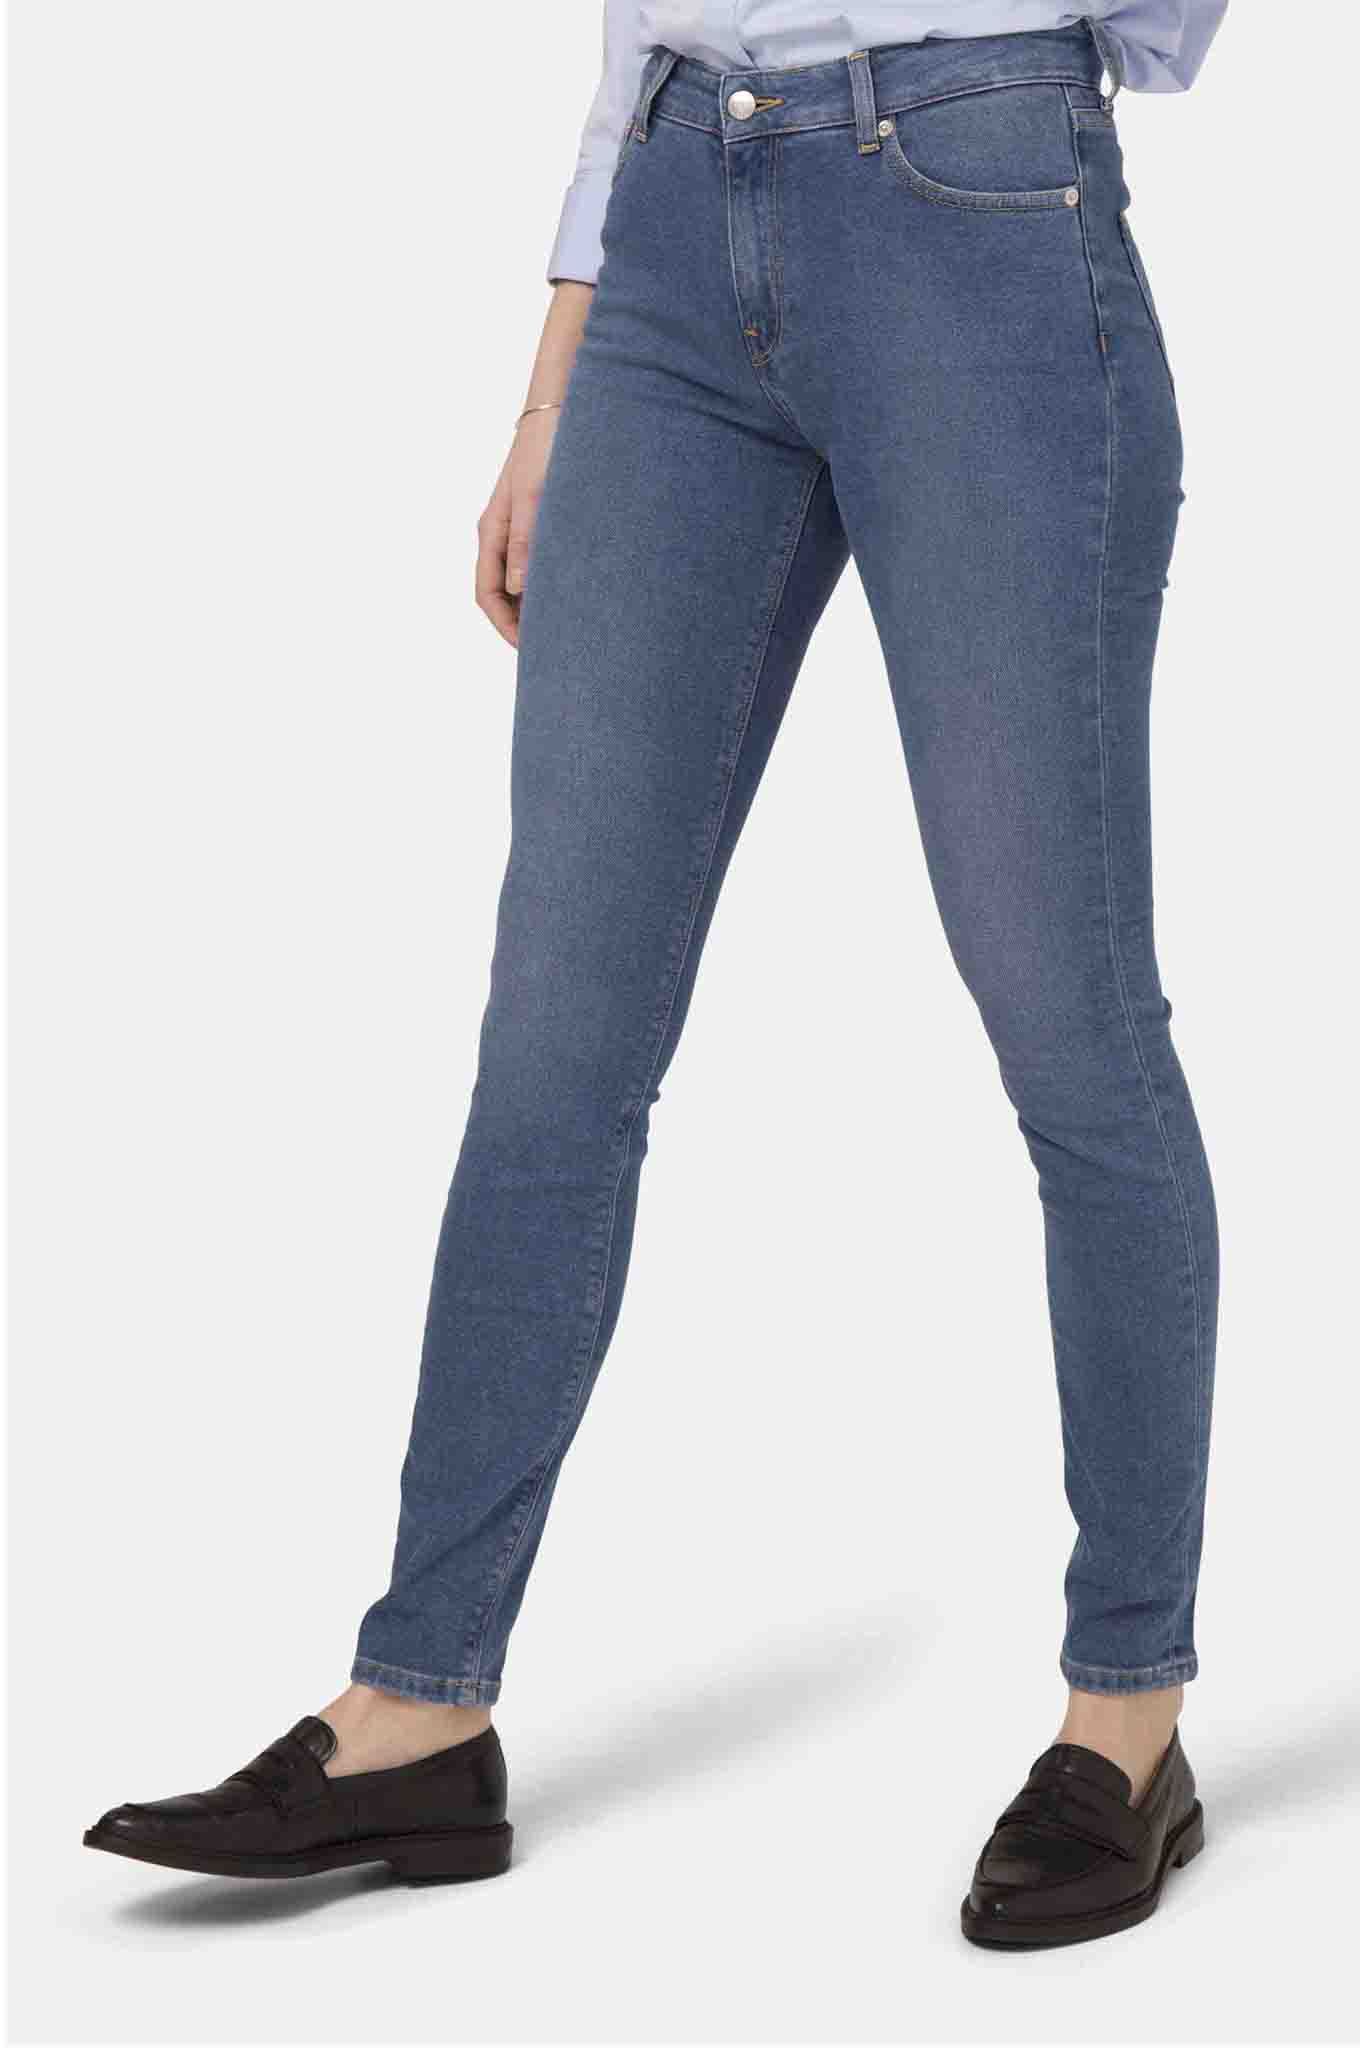 blue jeans for women